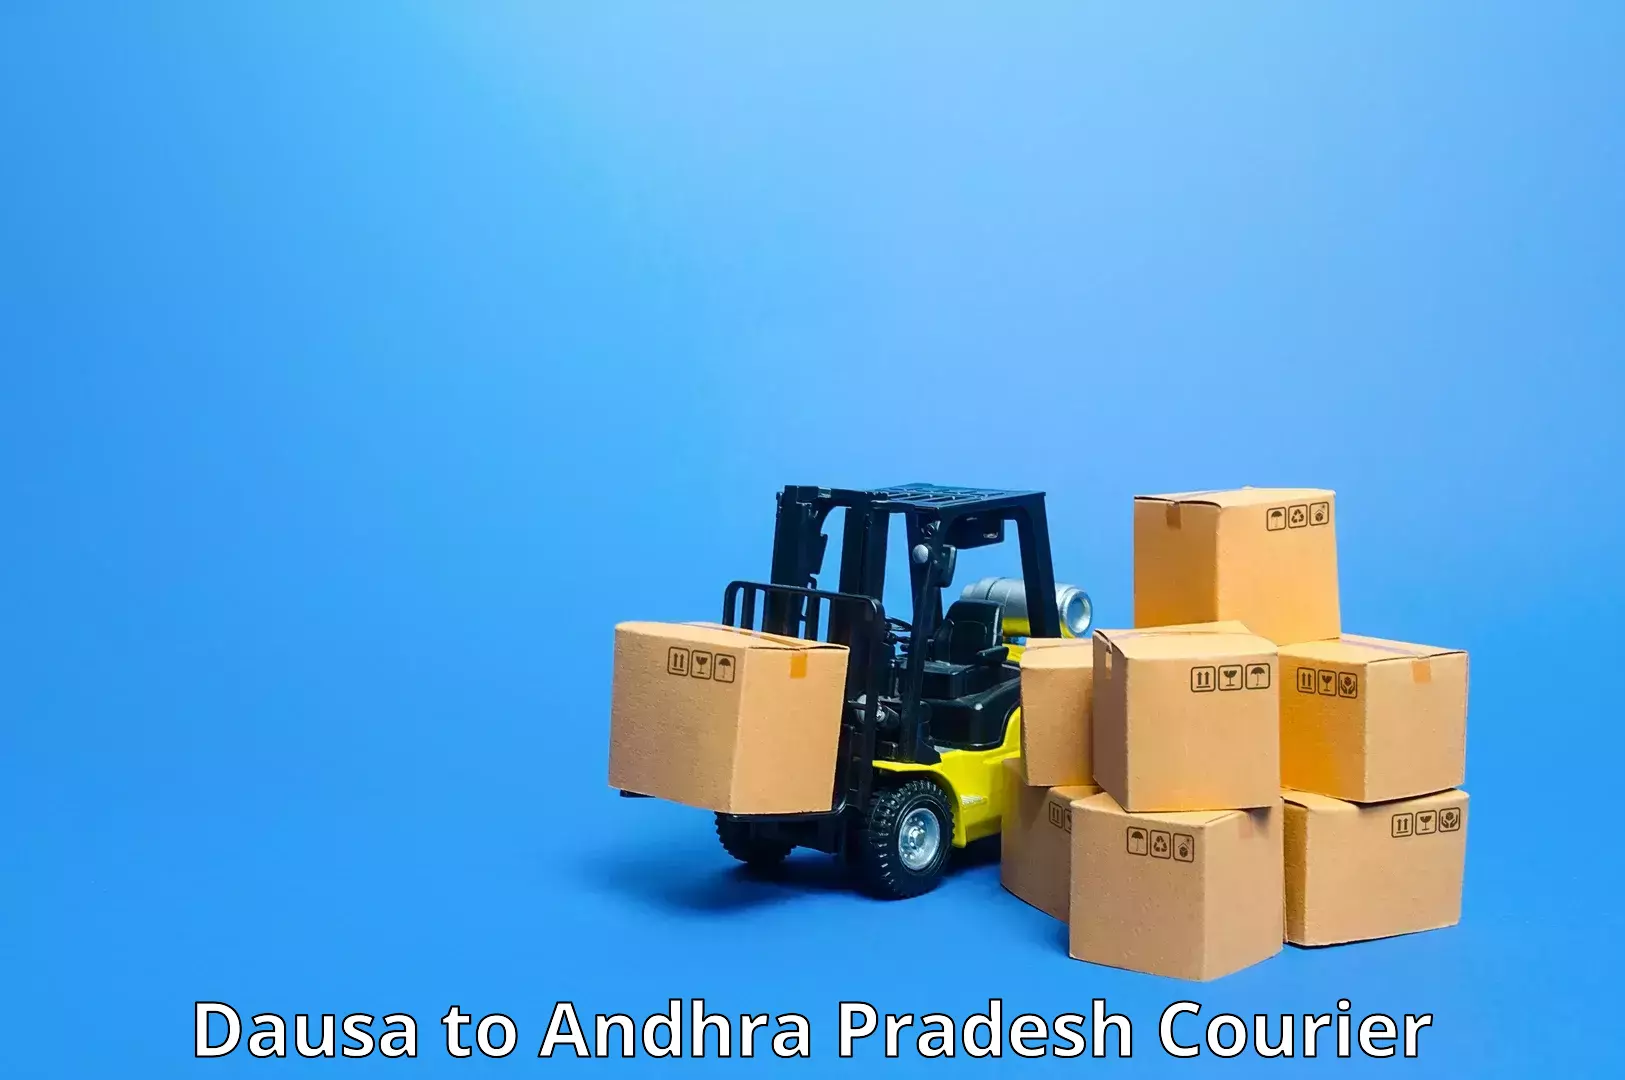 On-call courier service Dausa to Chodavaram